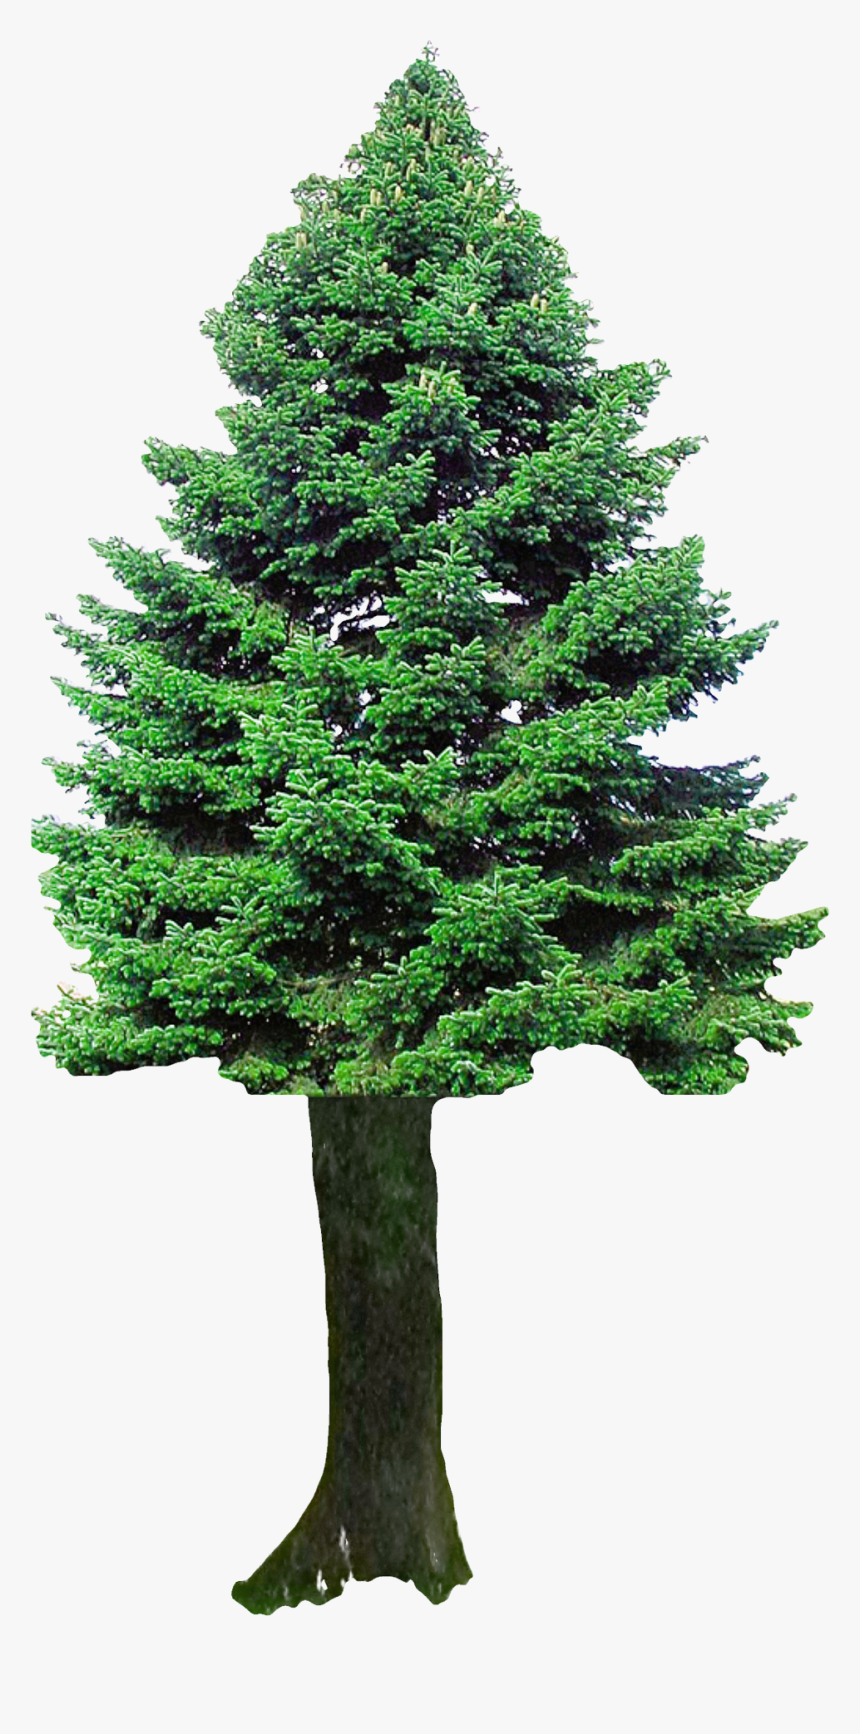 Transparent Background Cedar Tree Png, Png Download, Free Download